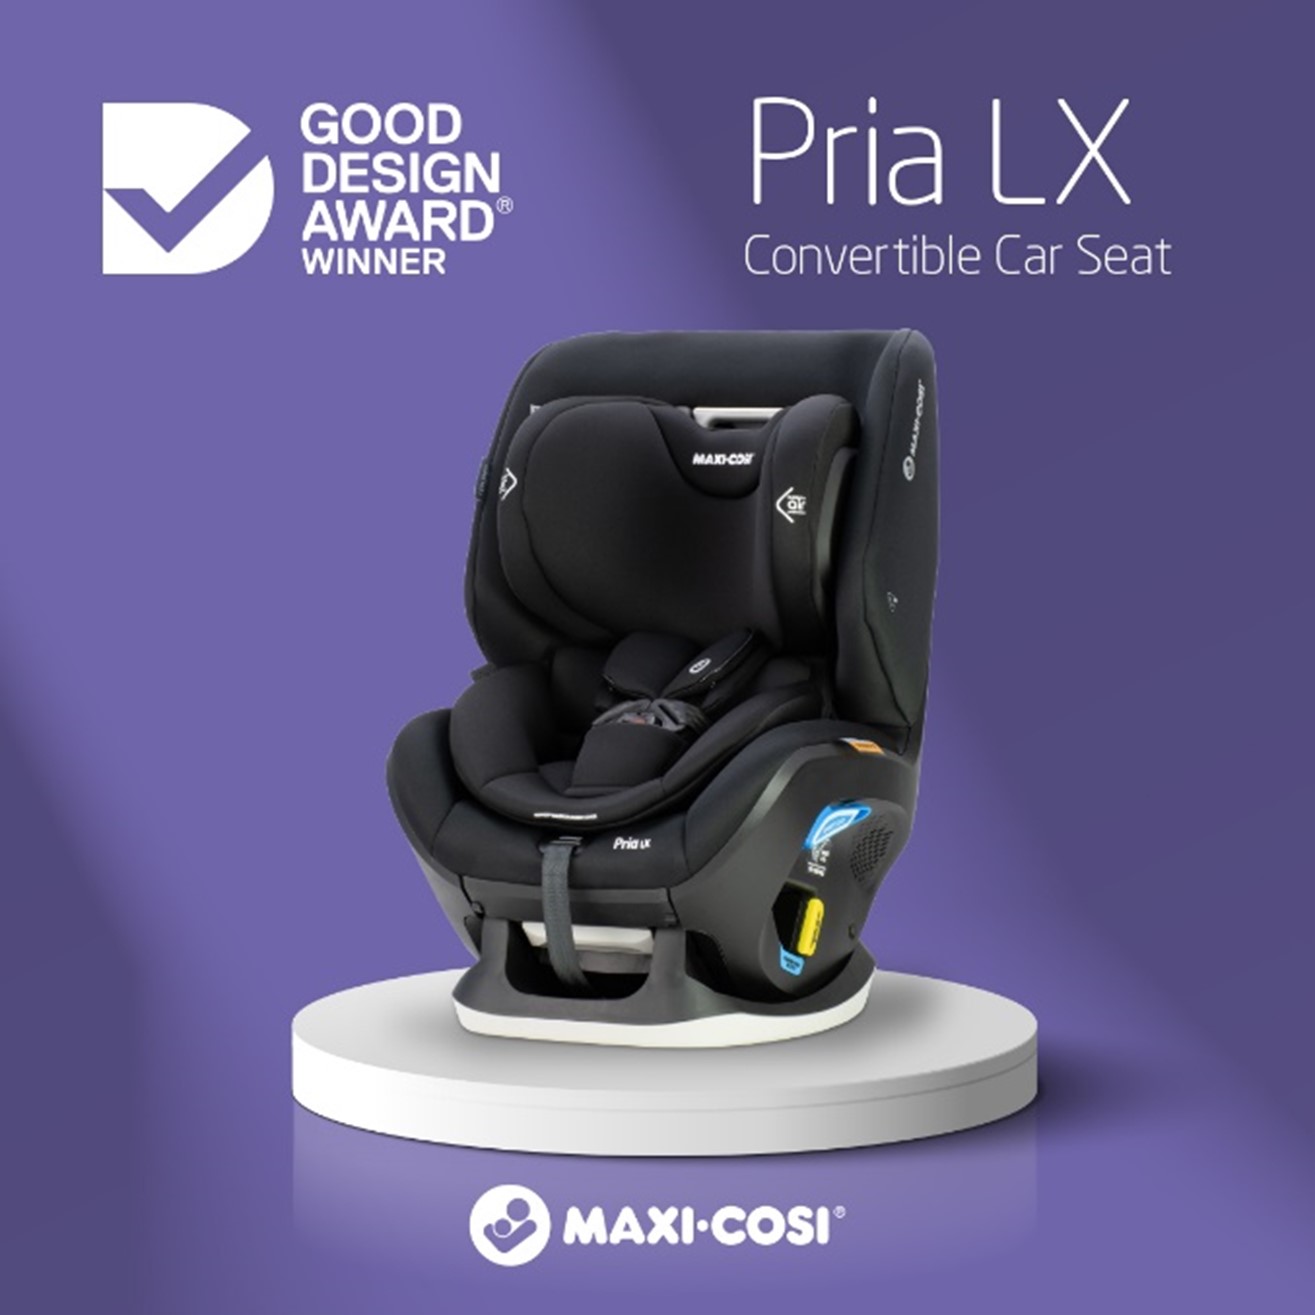 Pria LX Good Design Award